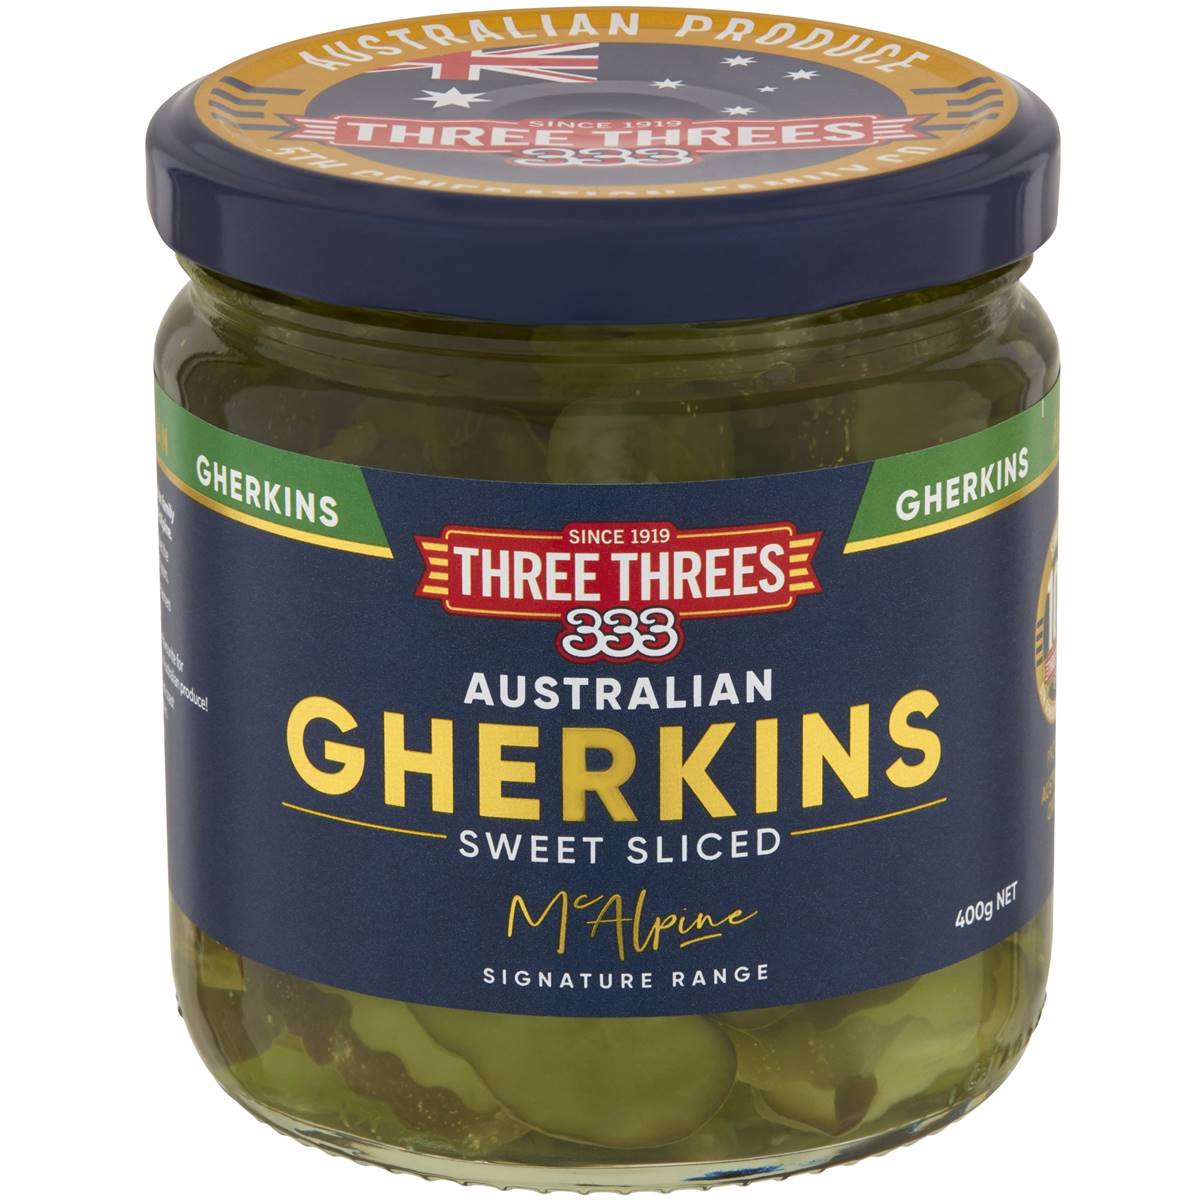 Calories in Three Threes Australian Gherkins Sweet Sliced